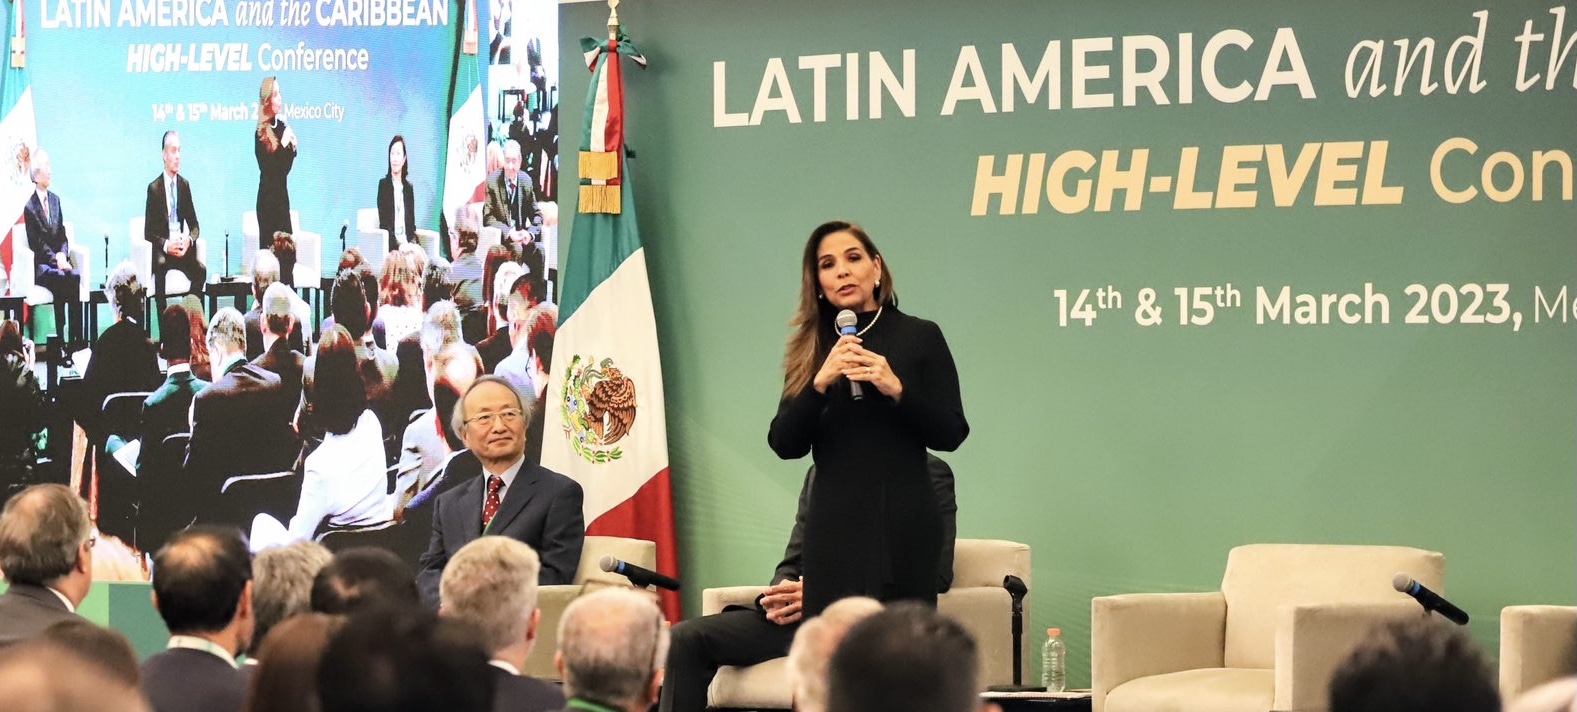 Logra Mara Lezama sede del STS Forum- Latin America and the Caribbean High-Level Conference.